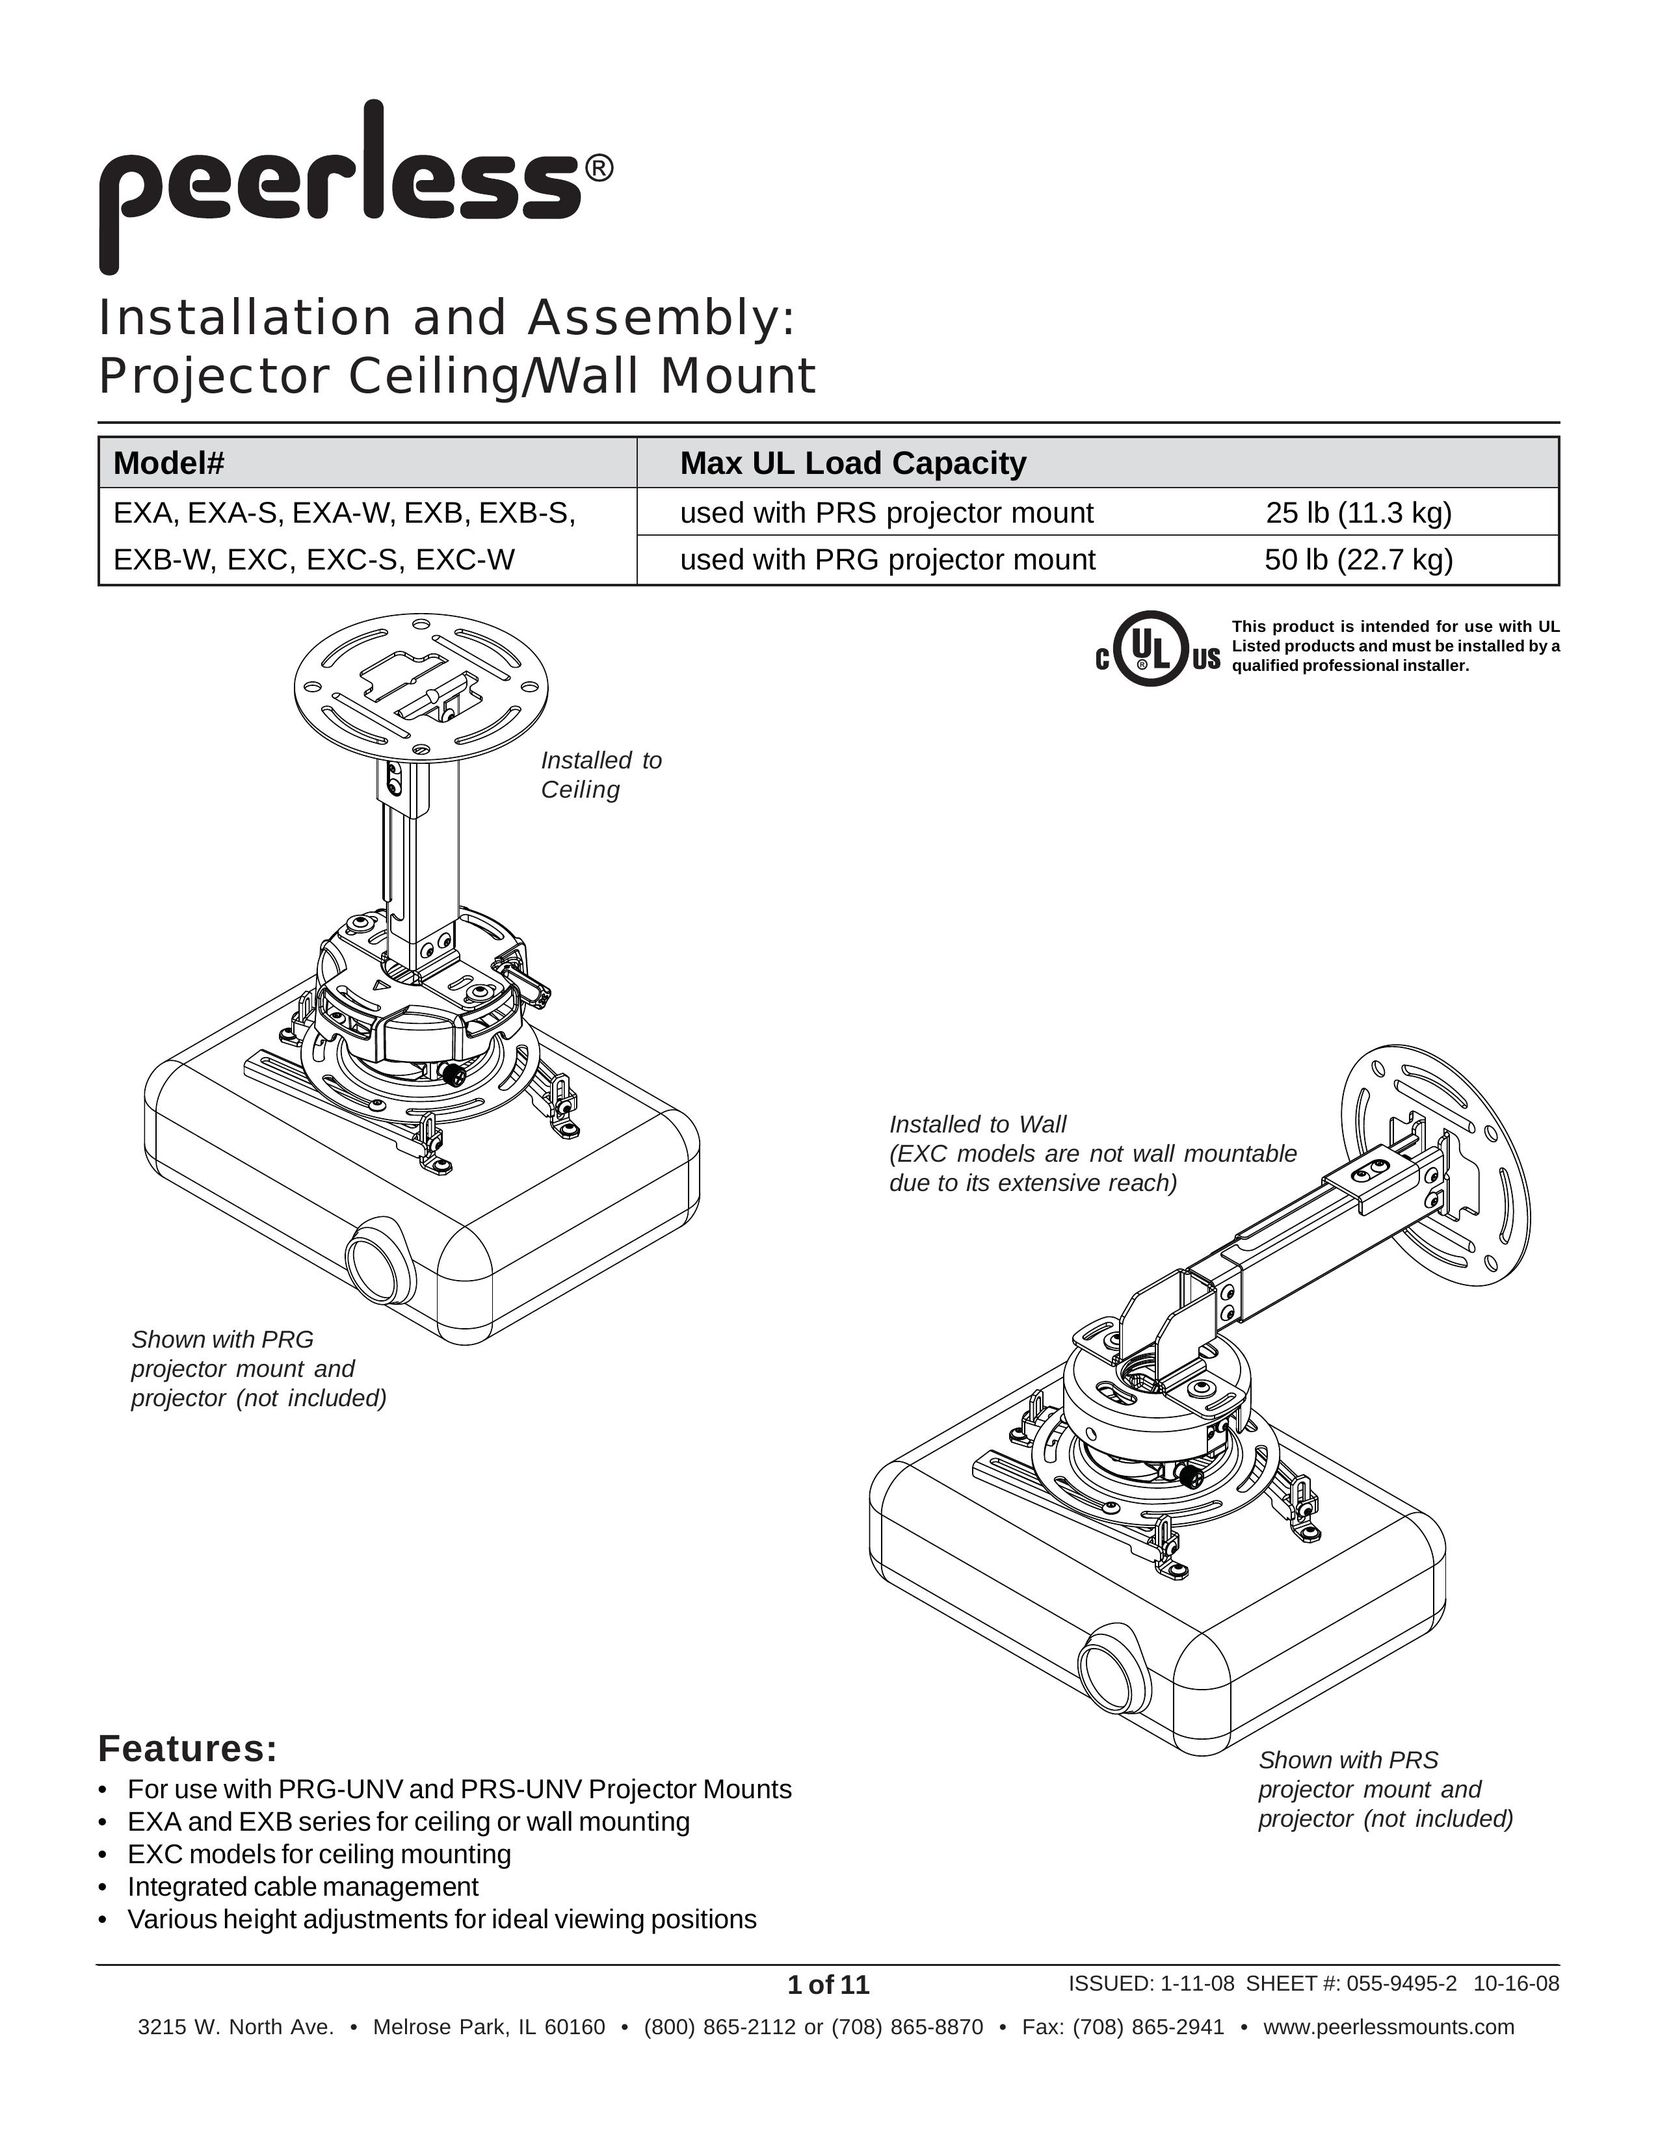 Peerless Industries EXB-W Projector User Manual